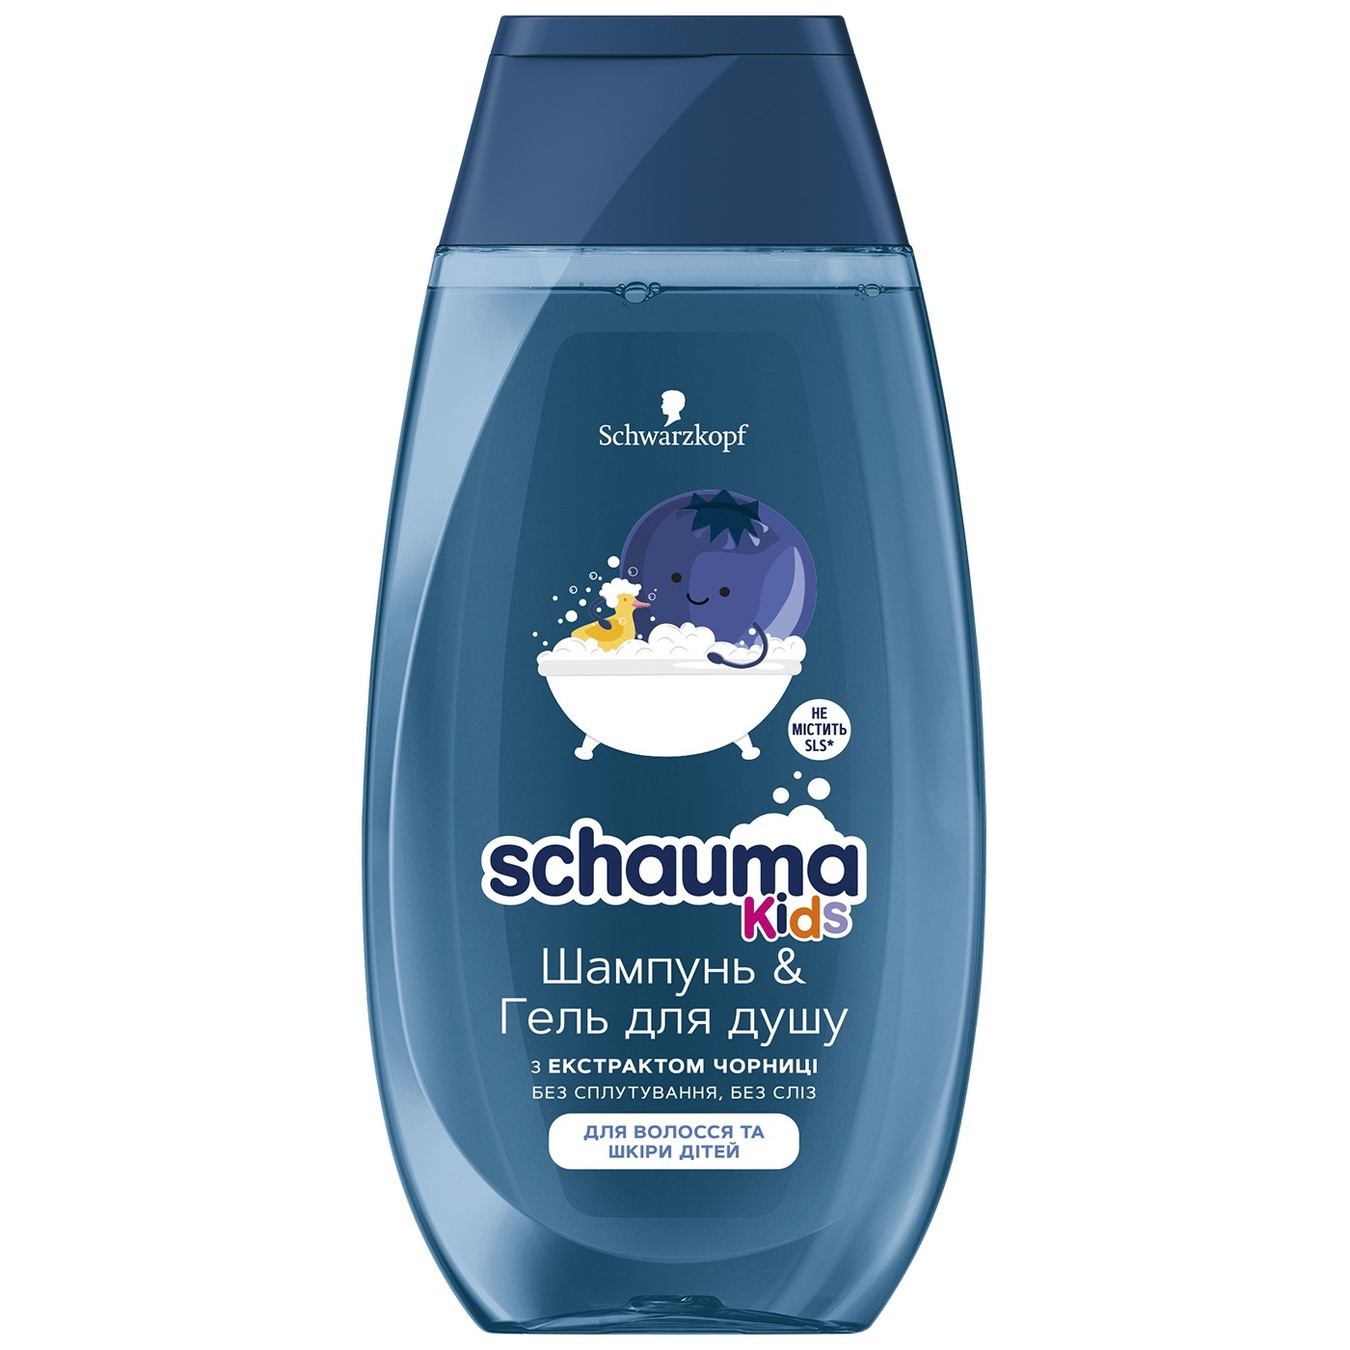 Schauma Kids Shampoo And Shower Gel 250ml